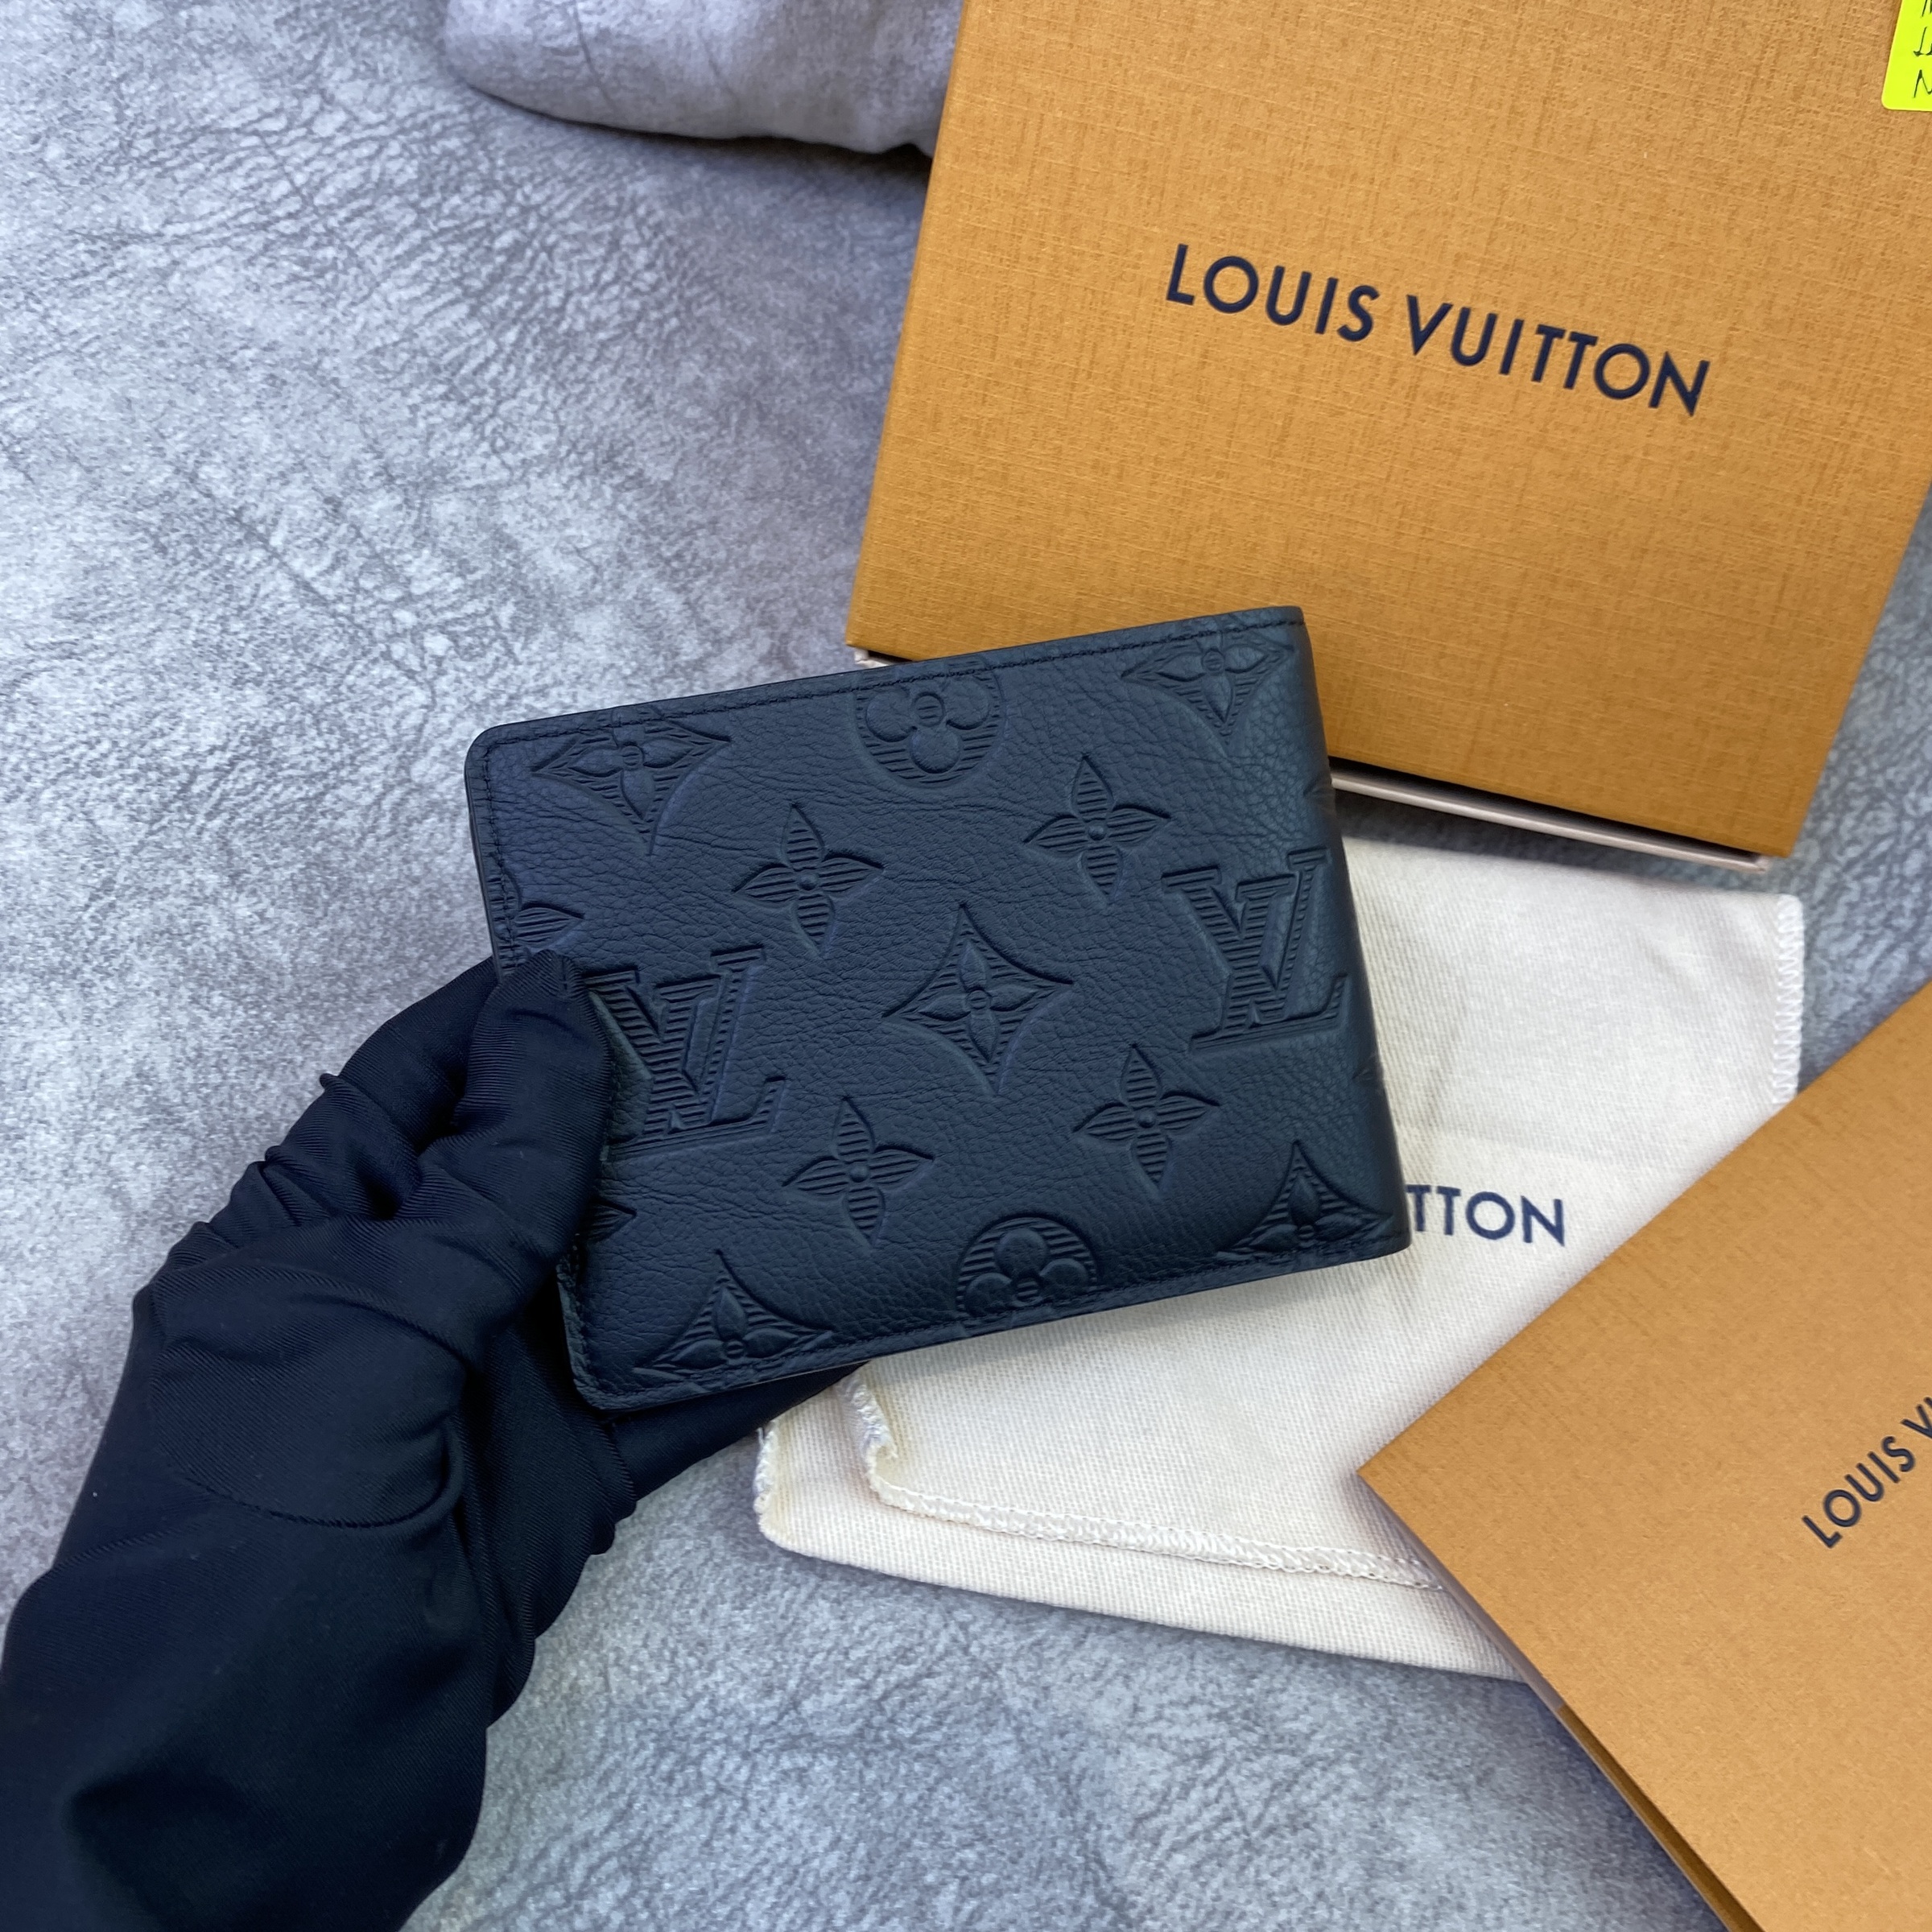 LOUIS VUITTON MULTIPLE WALLET LEATHER MONOGRAM NOIR – Lbite Luxury Branded  - Your Trusted Luxury Expert